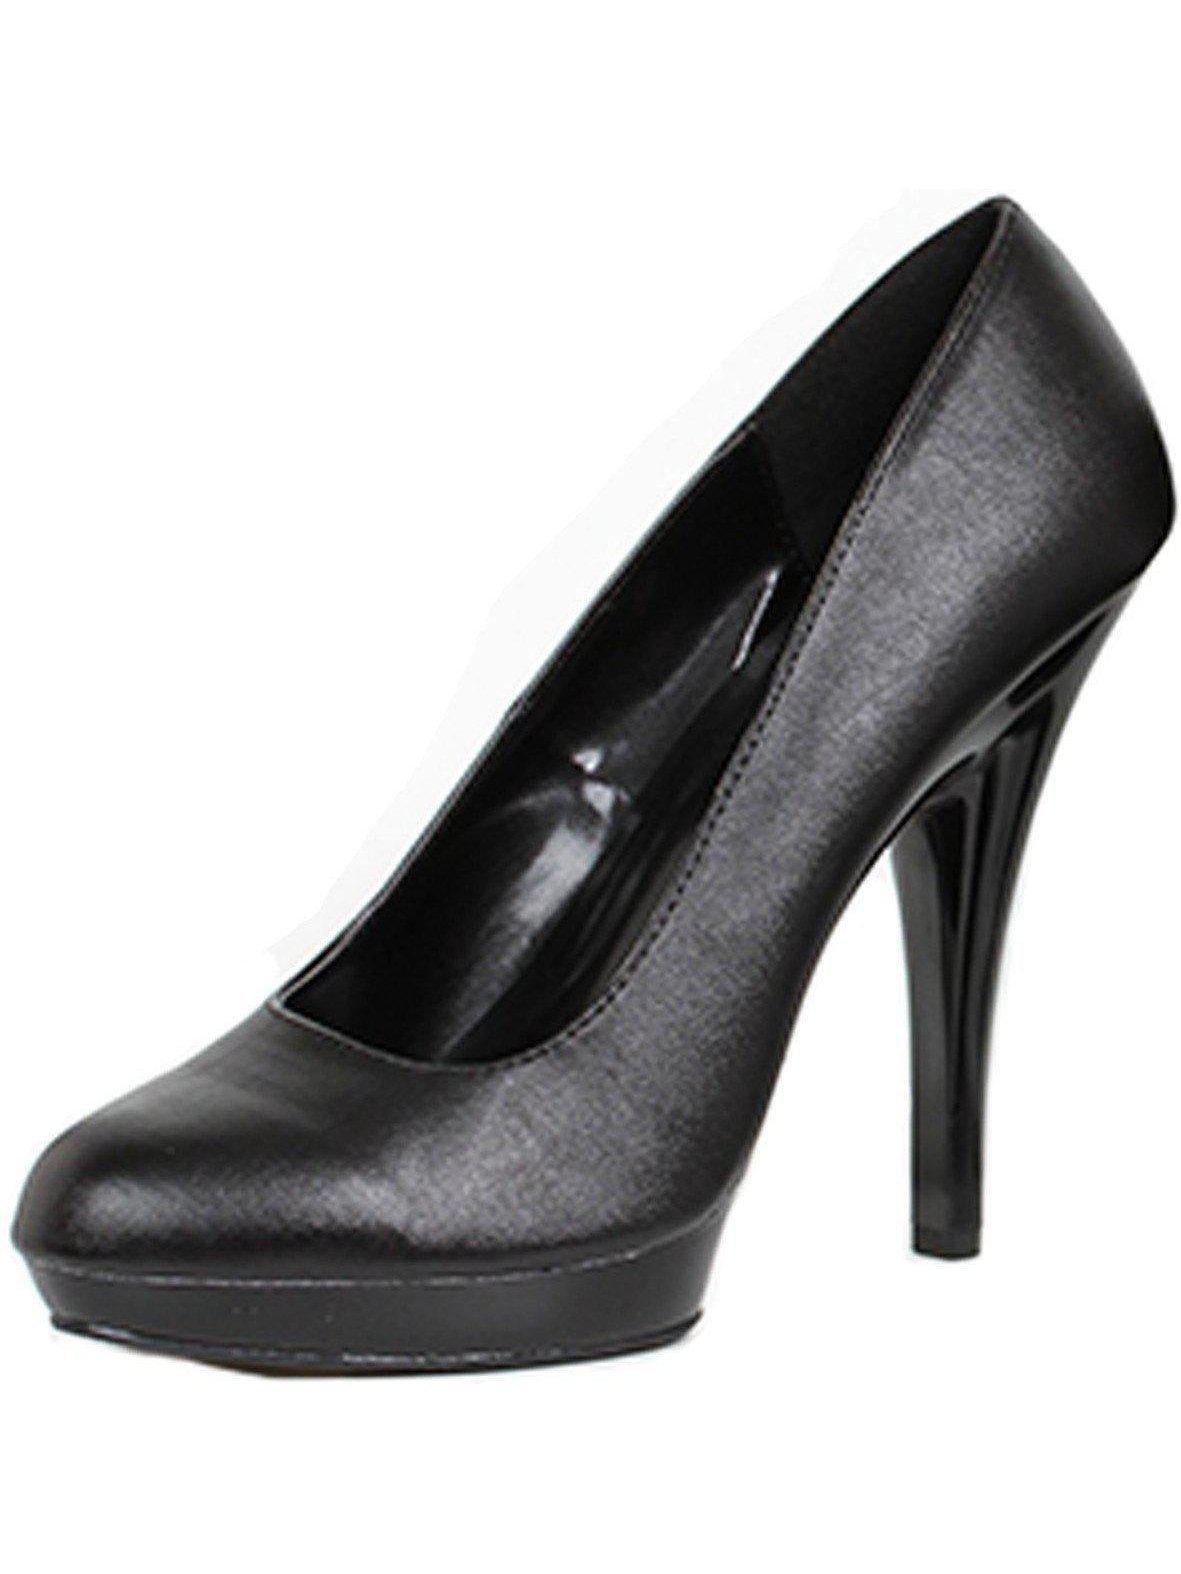 ELLIE SHOES - Ellie Shoes E-521-Femme-W 5 Heel Wide Width Pump Black ...